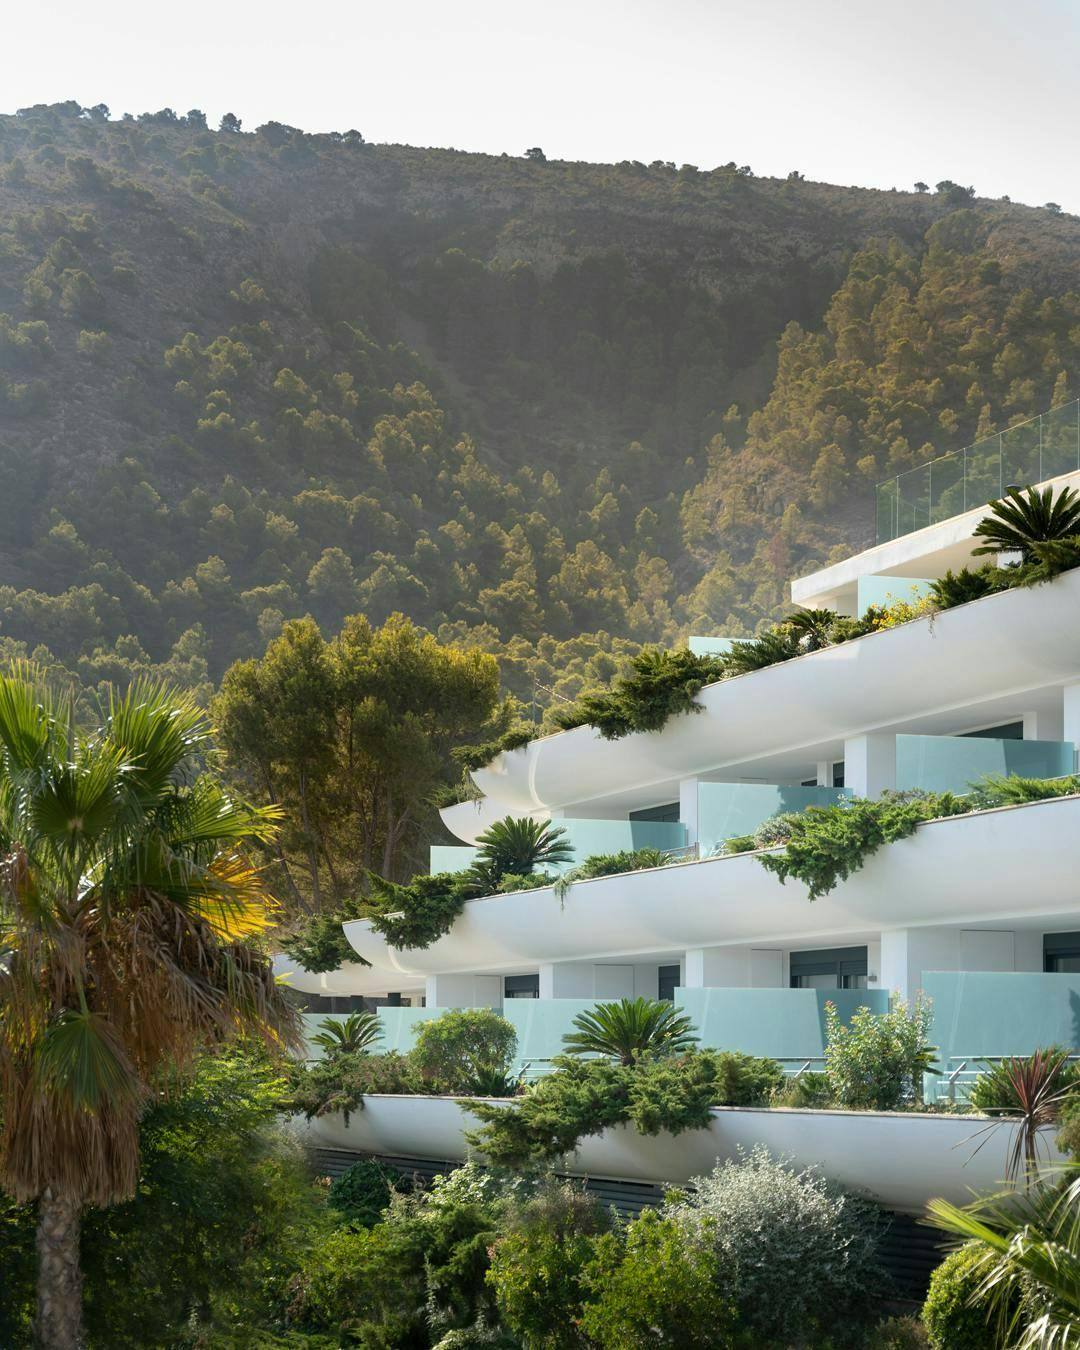 summer building hotel palm tree plant tree resort nature outdoors villa